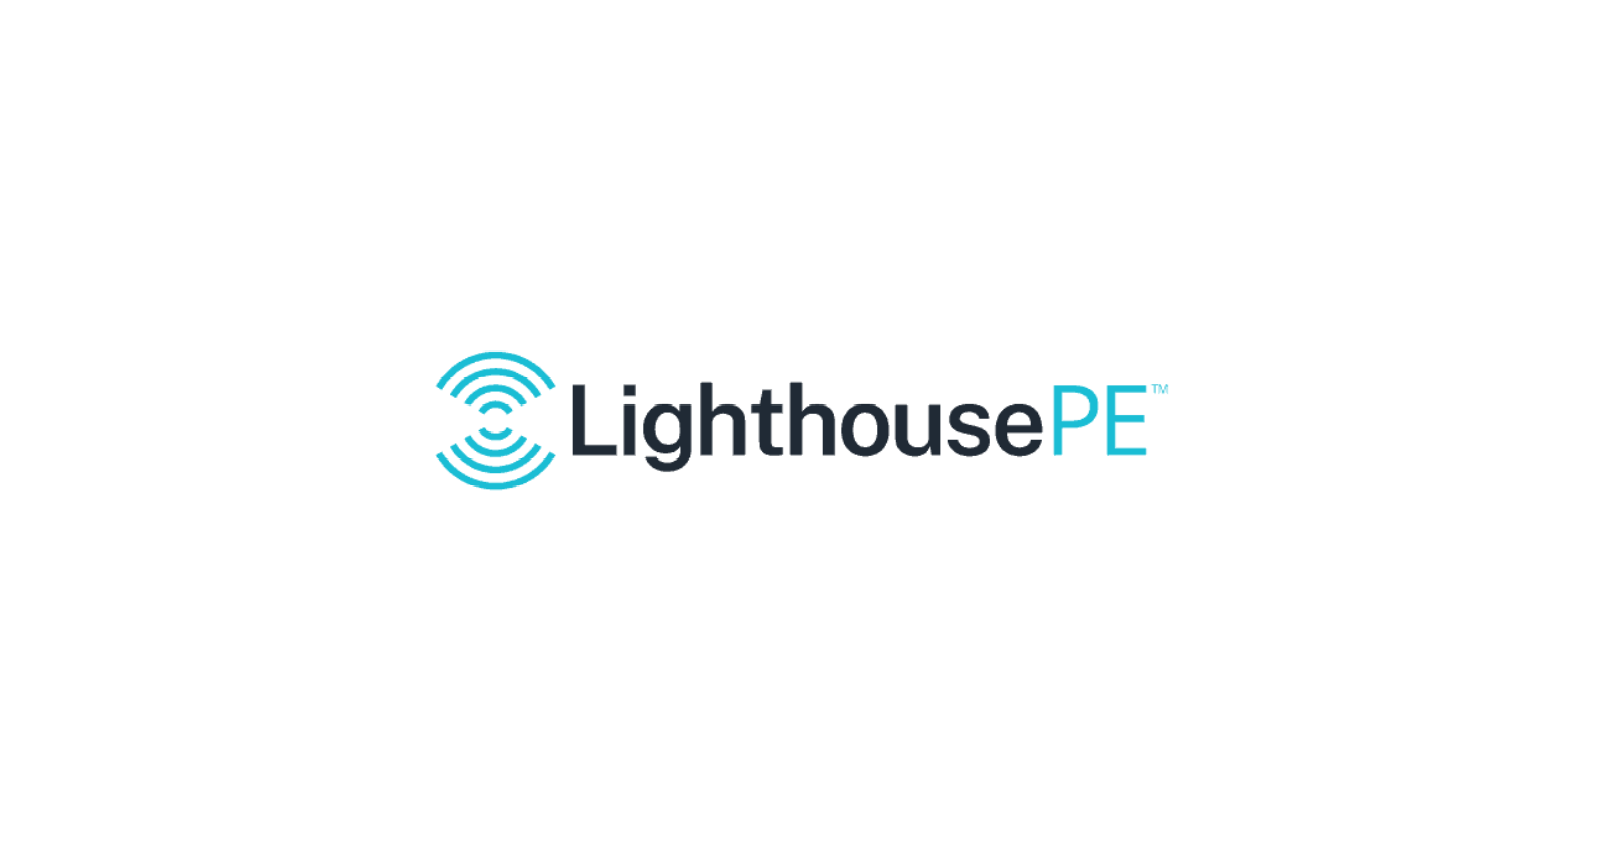 Transform Your Business - LighthousePE